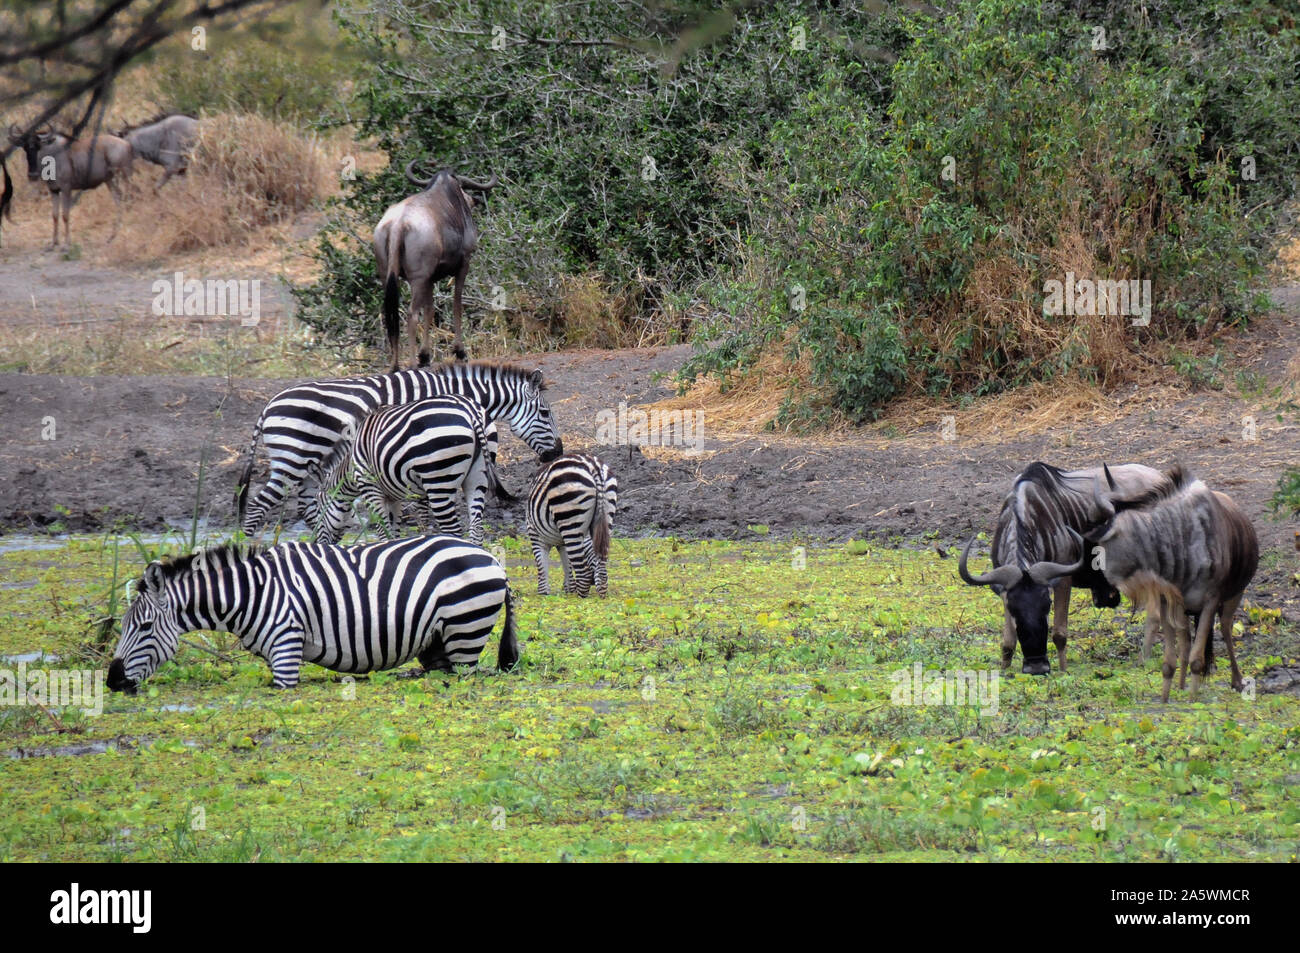 Zebras, Gnus im Sumpf, Serengeti, Tansania. Stockfoto